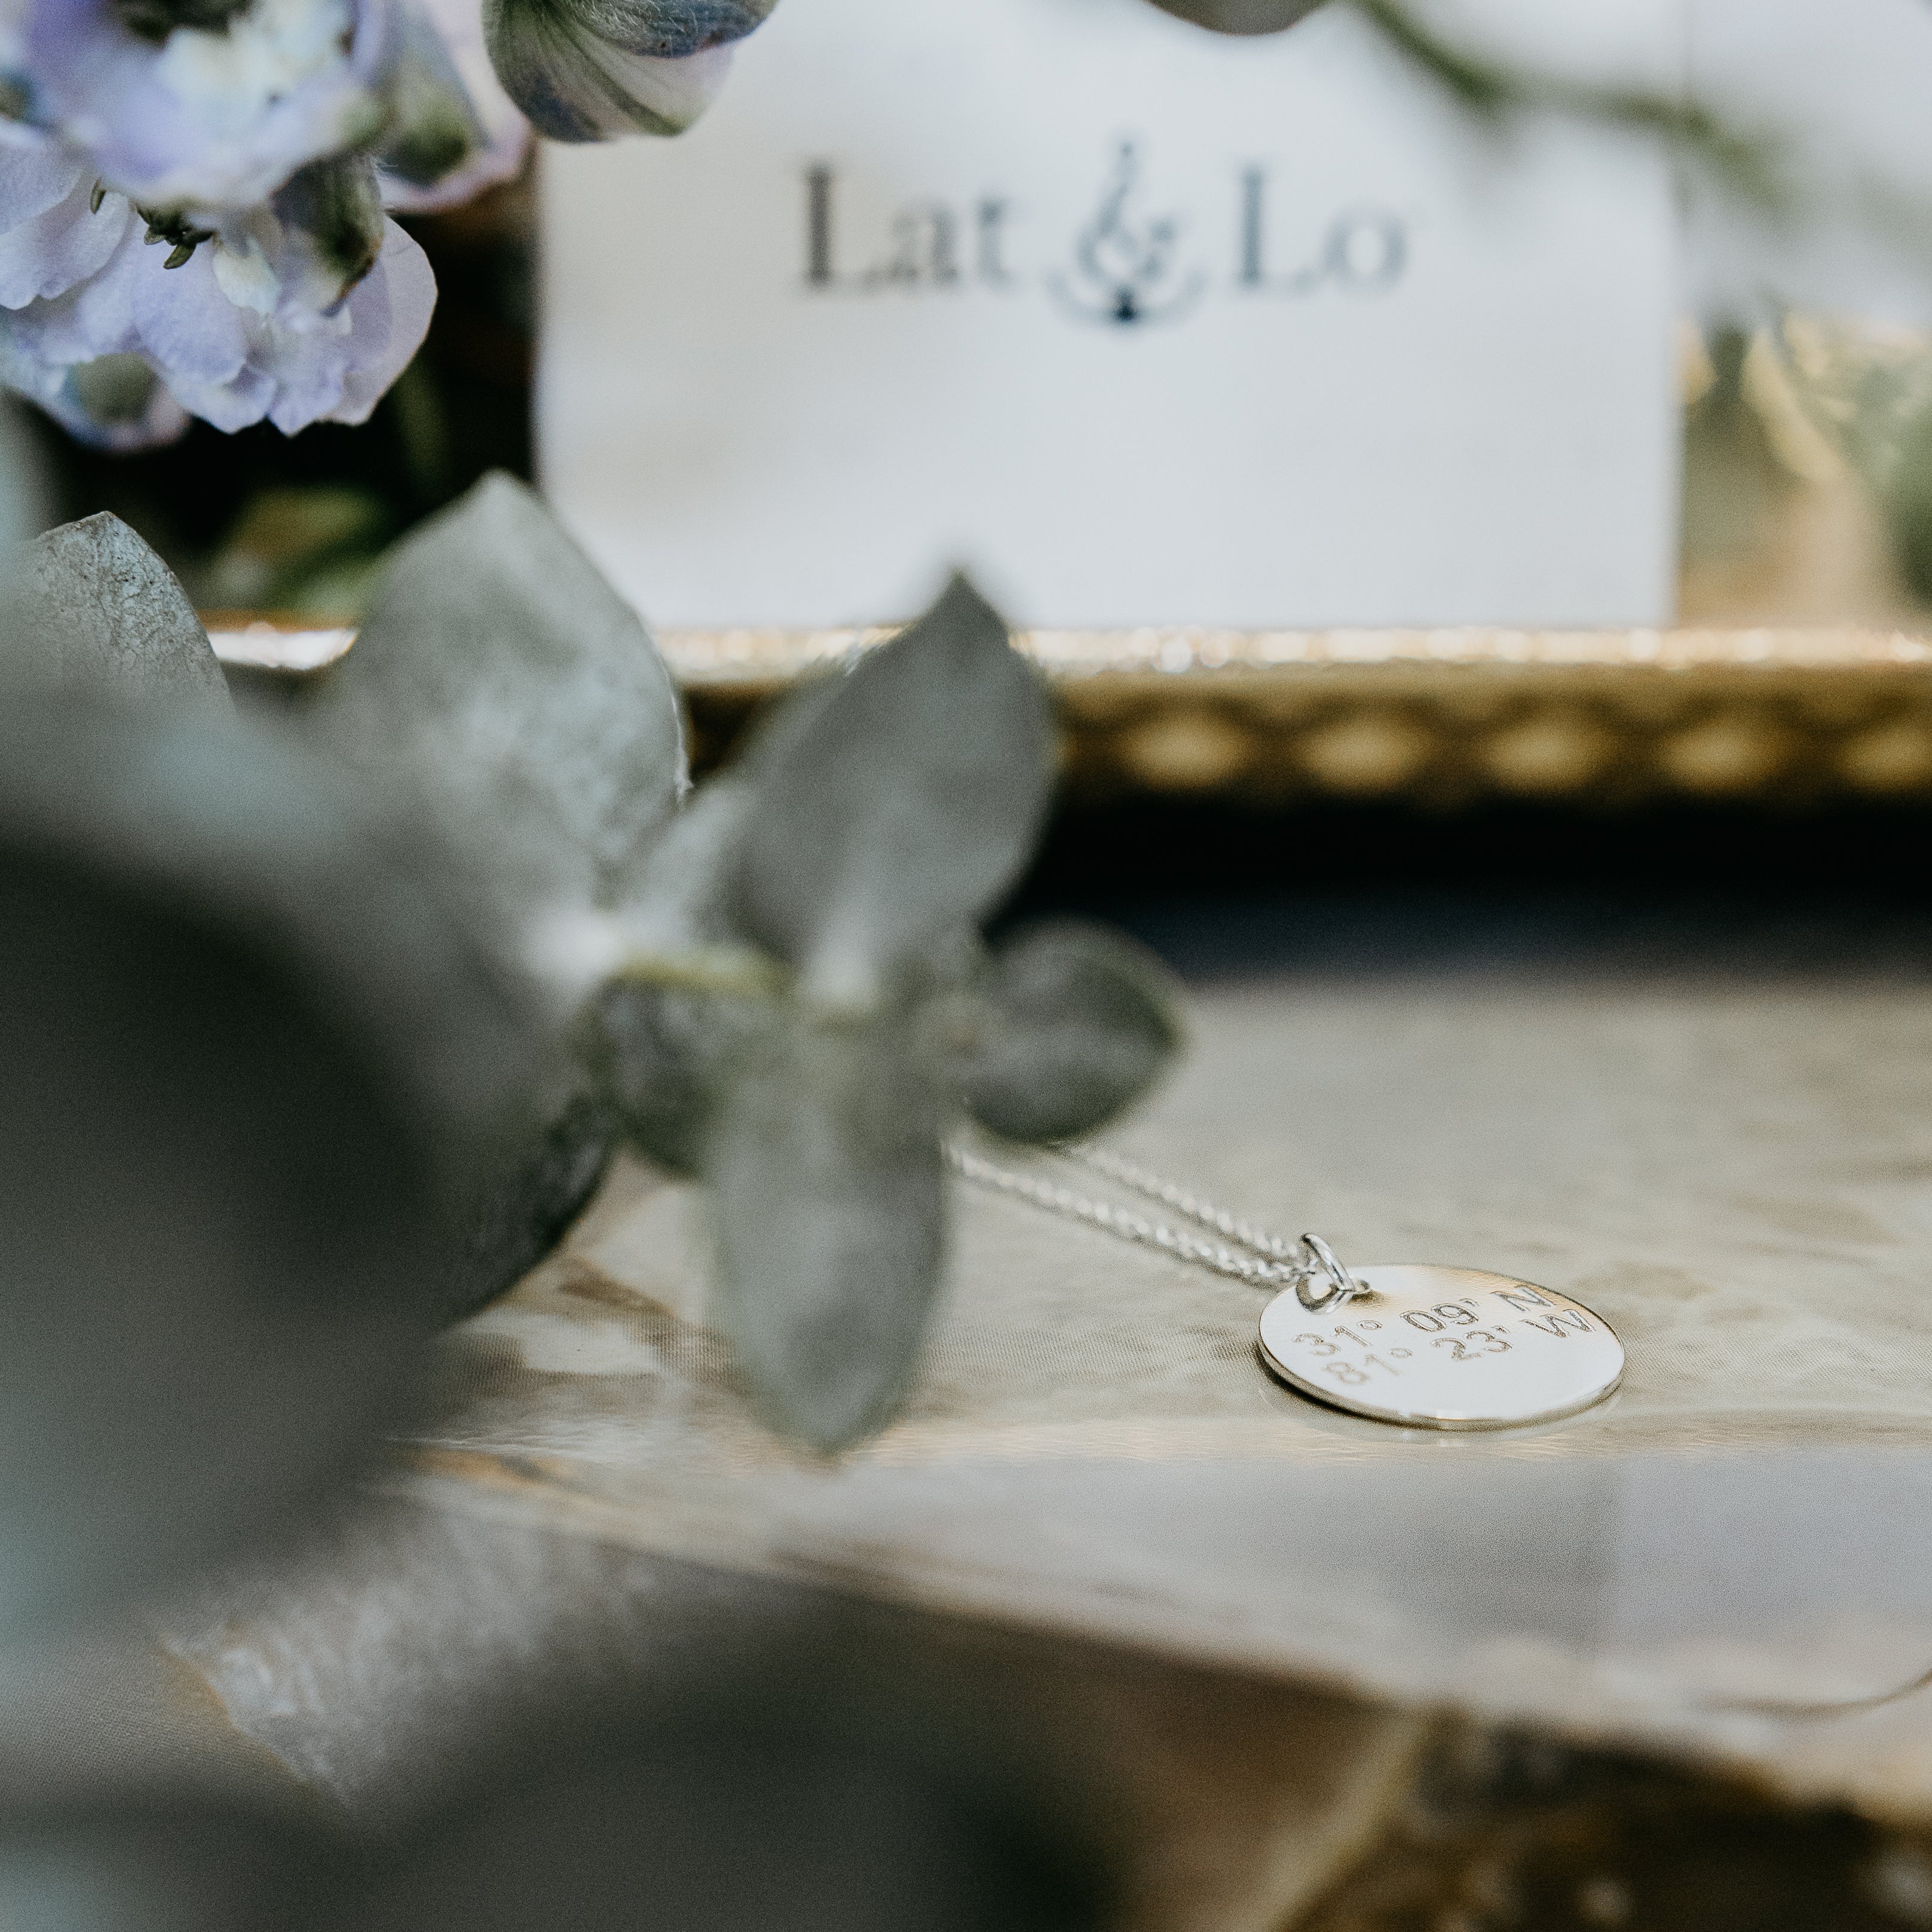 anniversary gift idea-coordinates jewelry-Lat & Lo